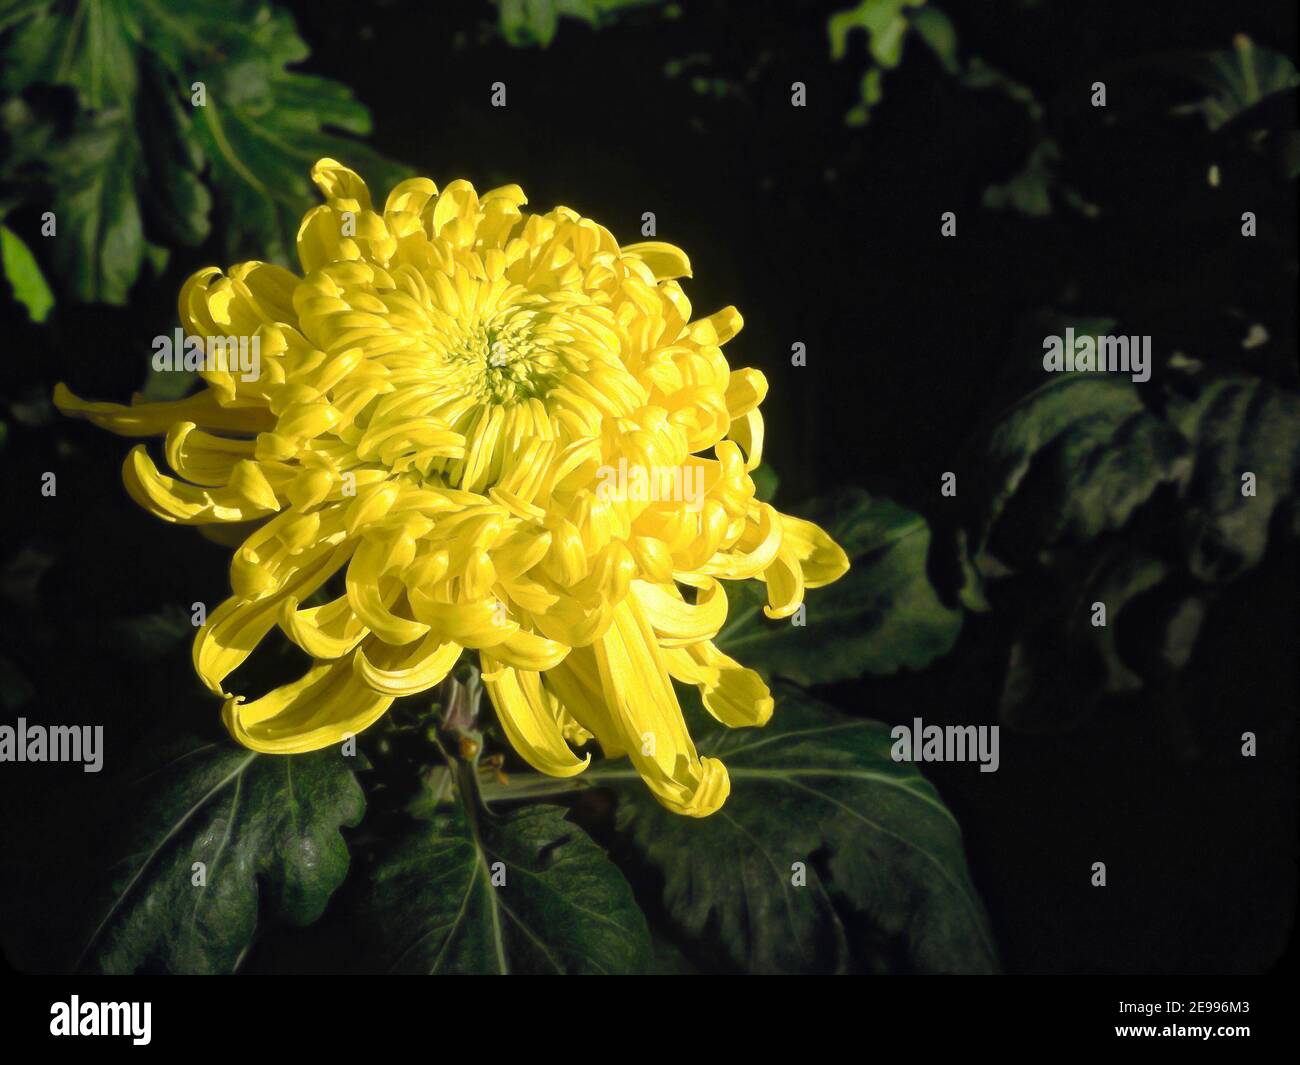 irregular incurve mum cv. bola de ora, bright yellow, curly petals, large cultivated flower, dark background, nature, garden, chrysanthemum, autumn Stock Photo